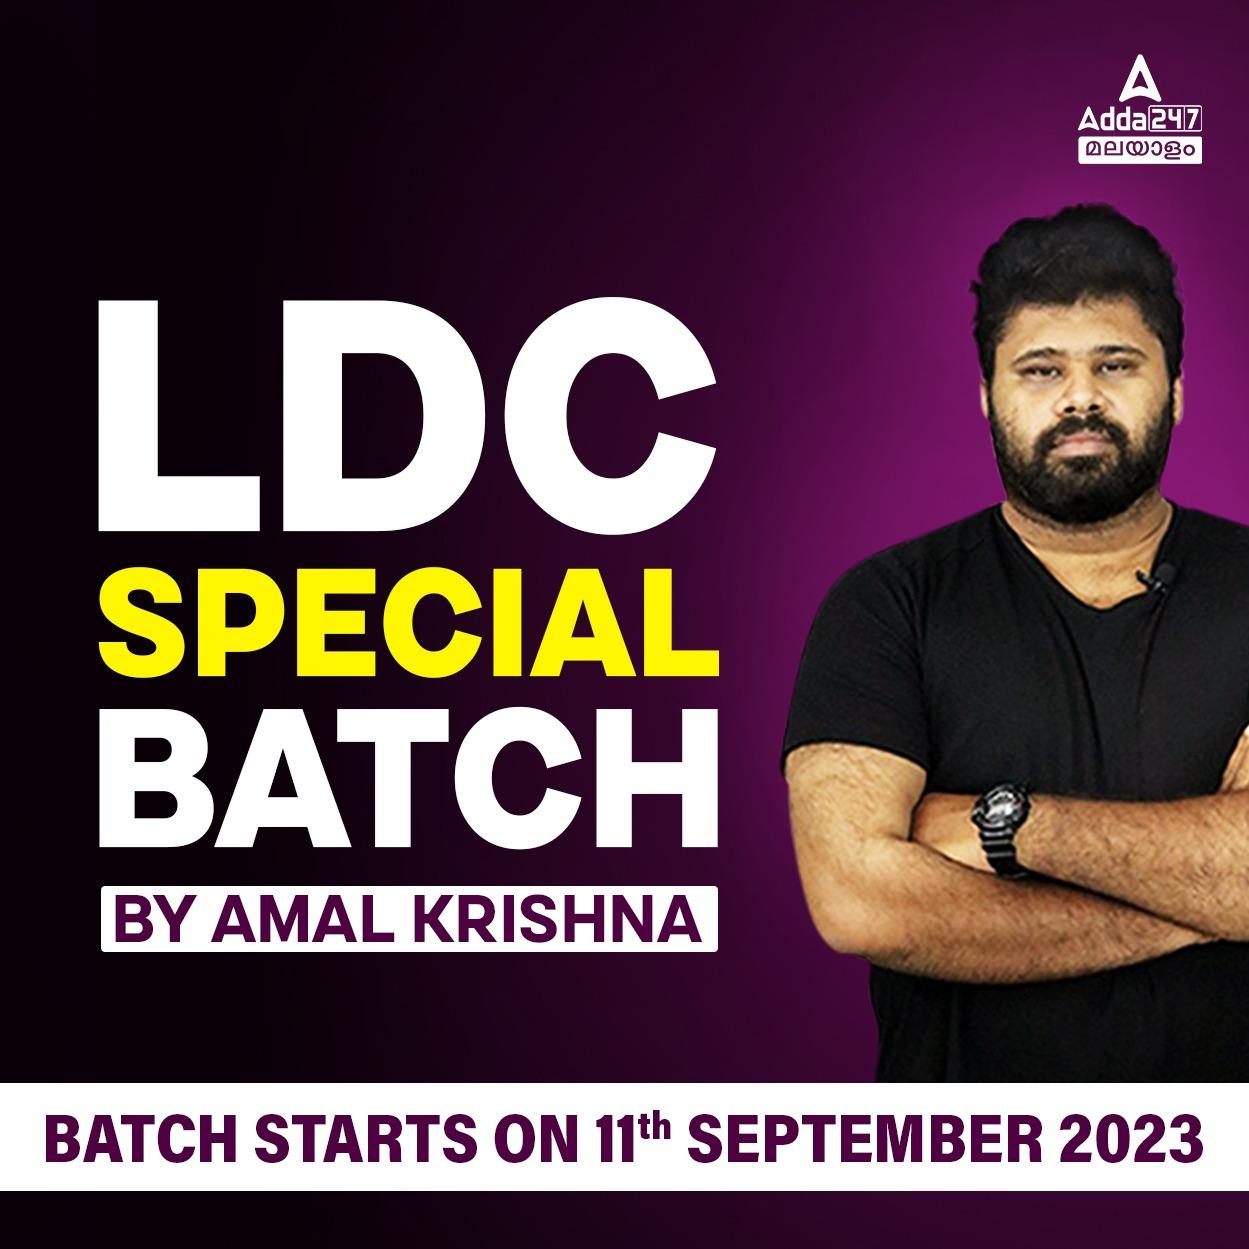 LDC SPECIAL BATCH BY AMAL